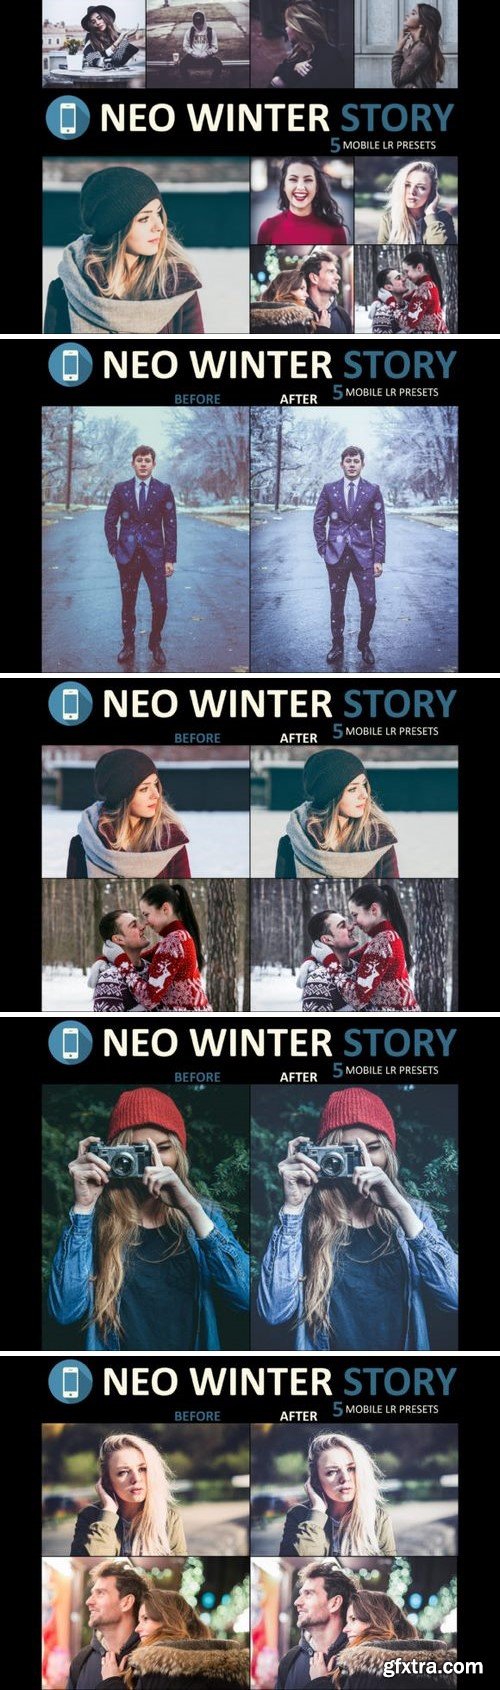 Thehungryjpeg - Neo Winter Story mobile lightroom presets 3524651